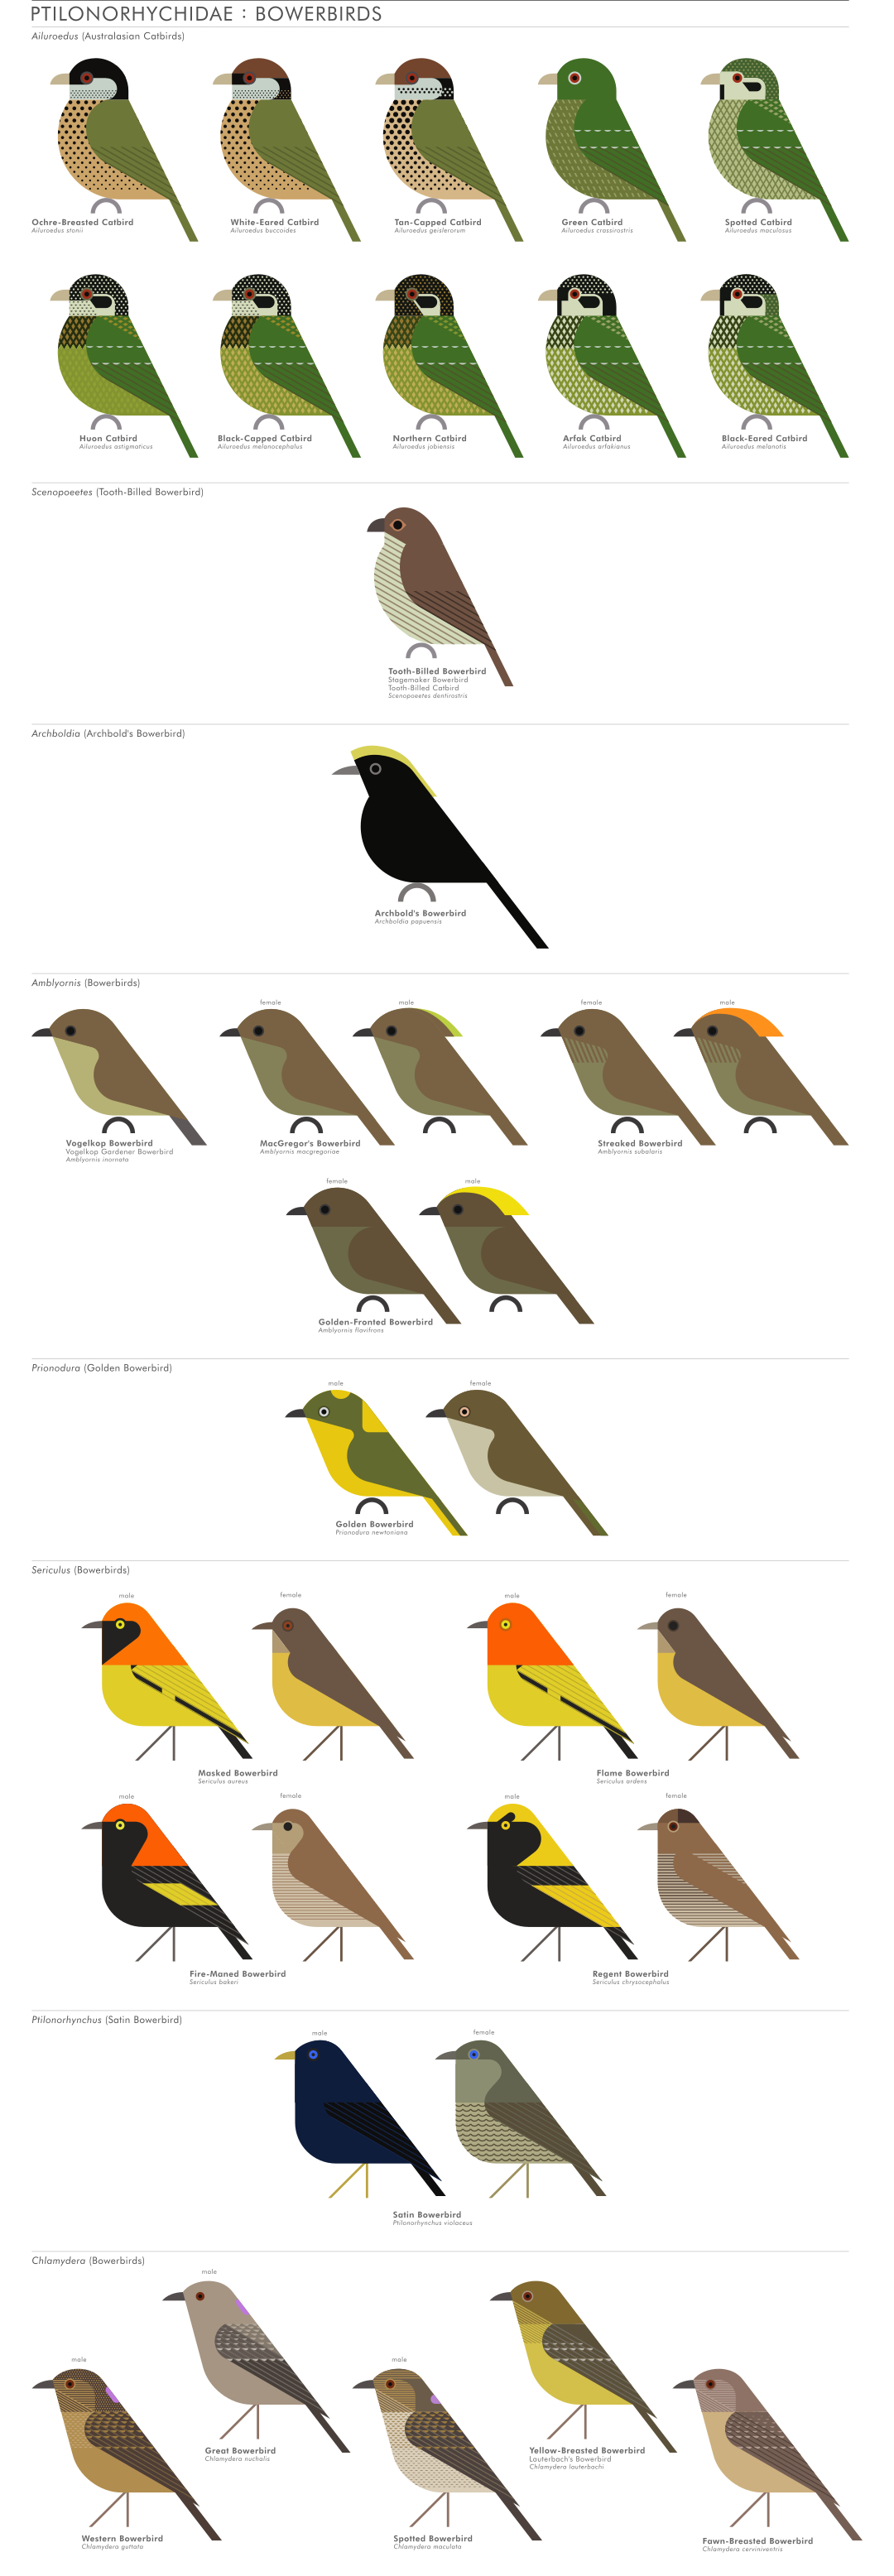 scott partridge - AVE - avian vector encyclopedia - bowerbirds - bird vector art